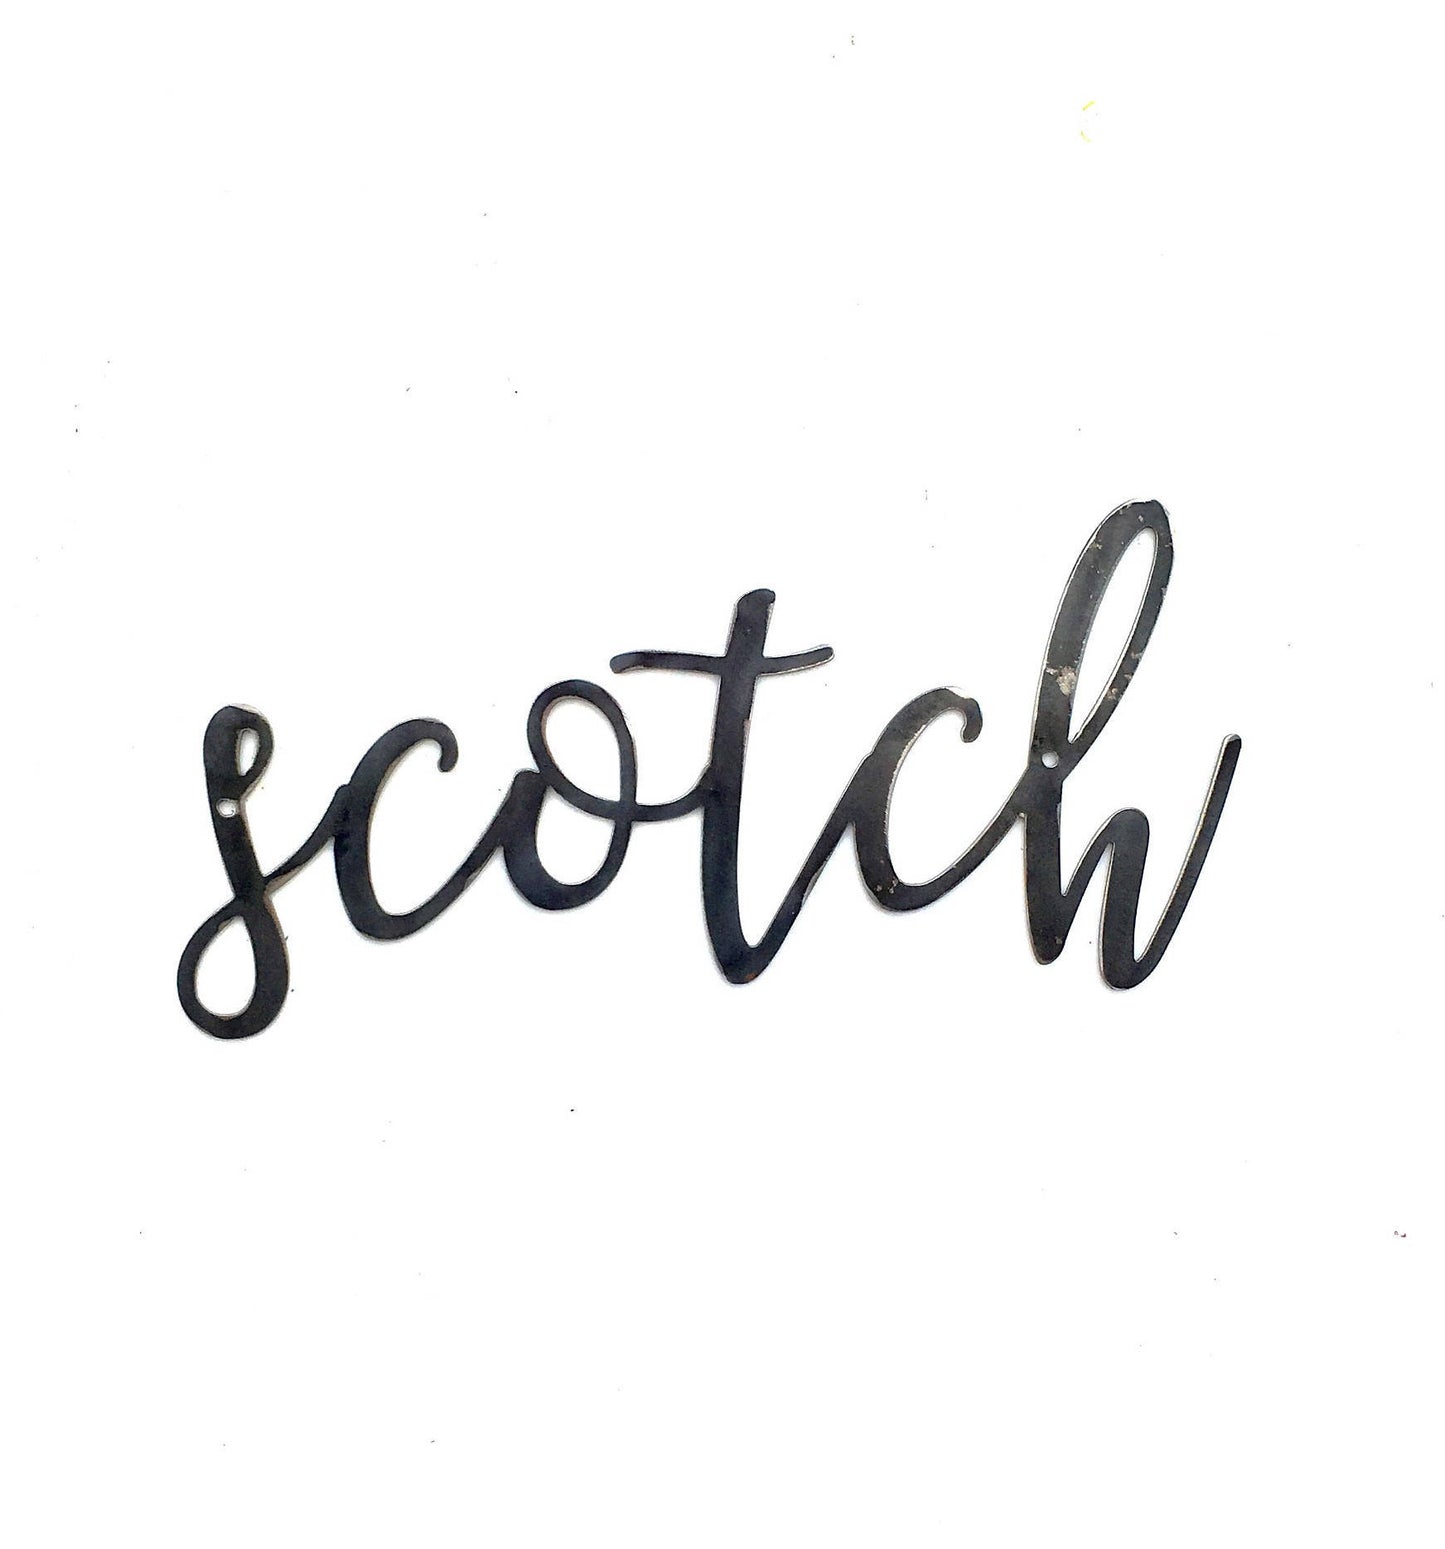 SCOTCH Script Metal Word Wall Expressions